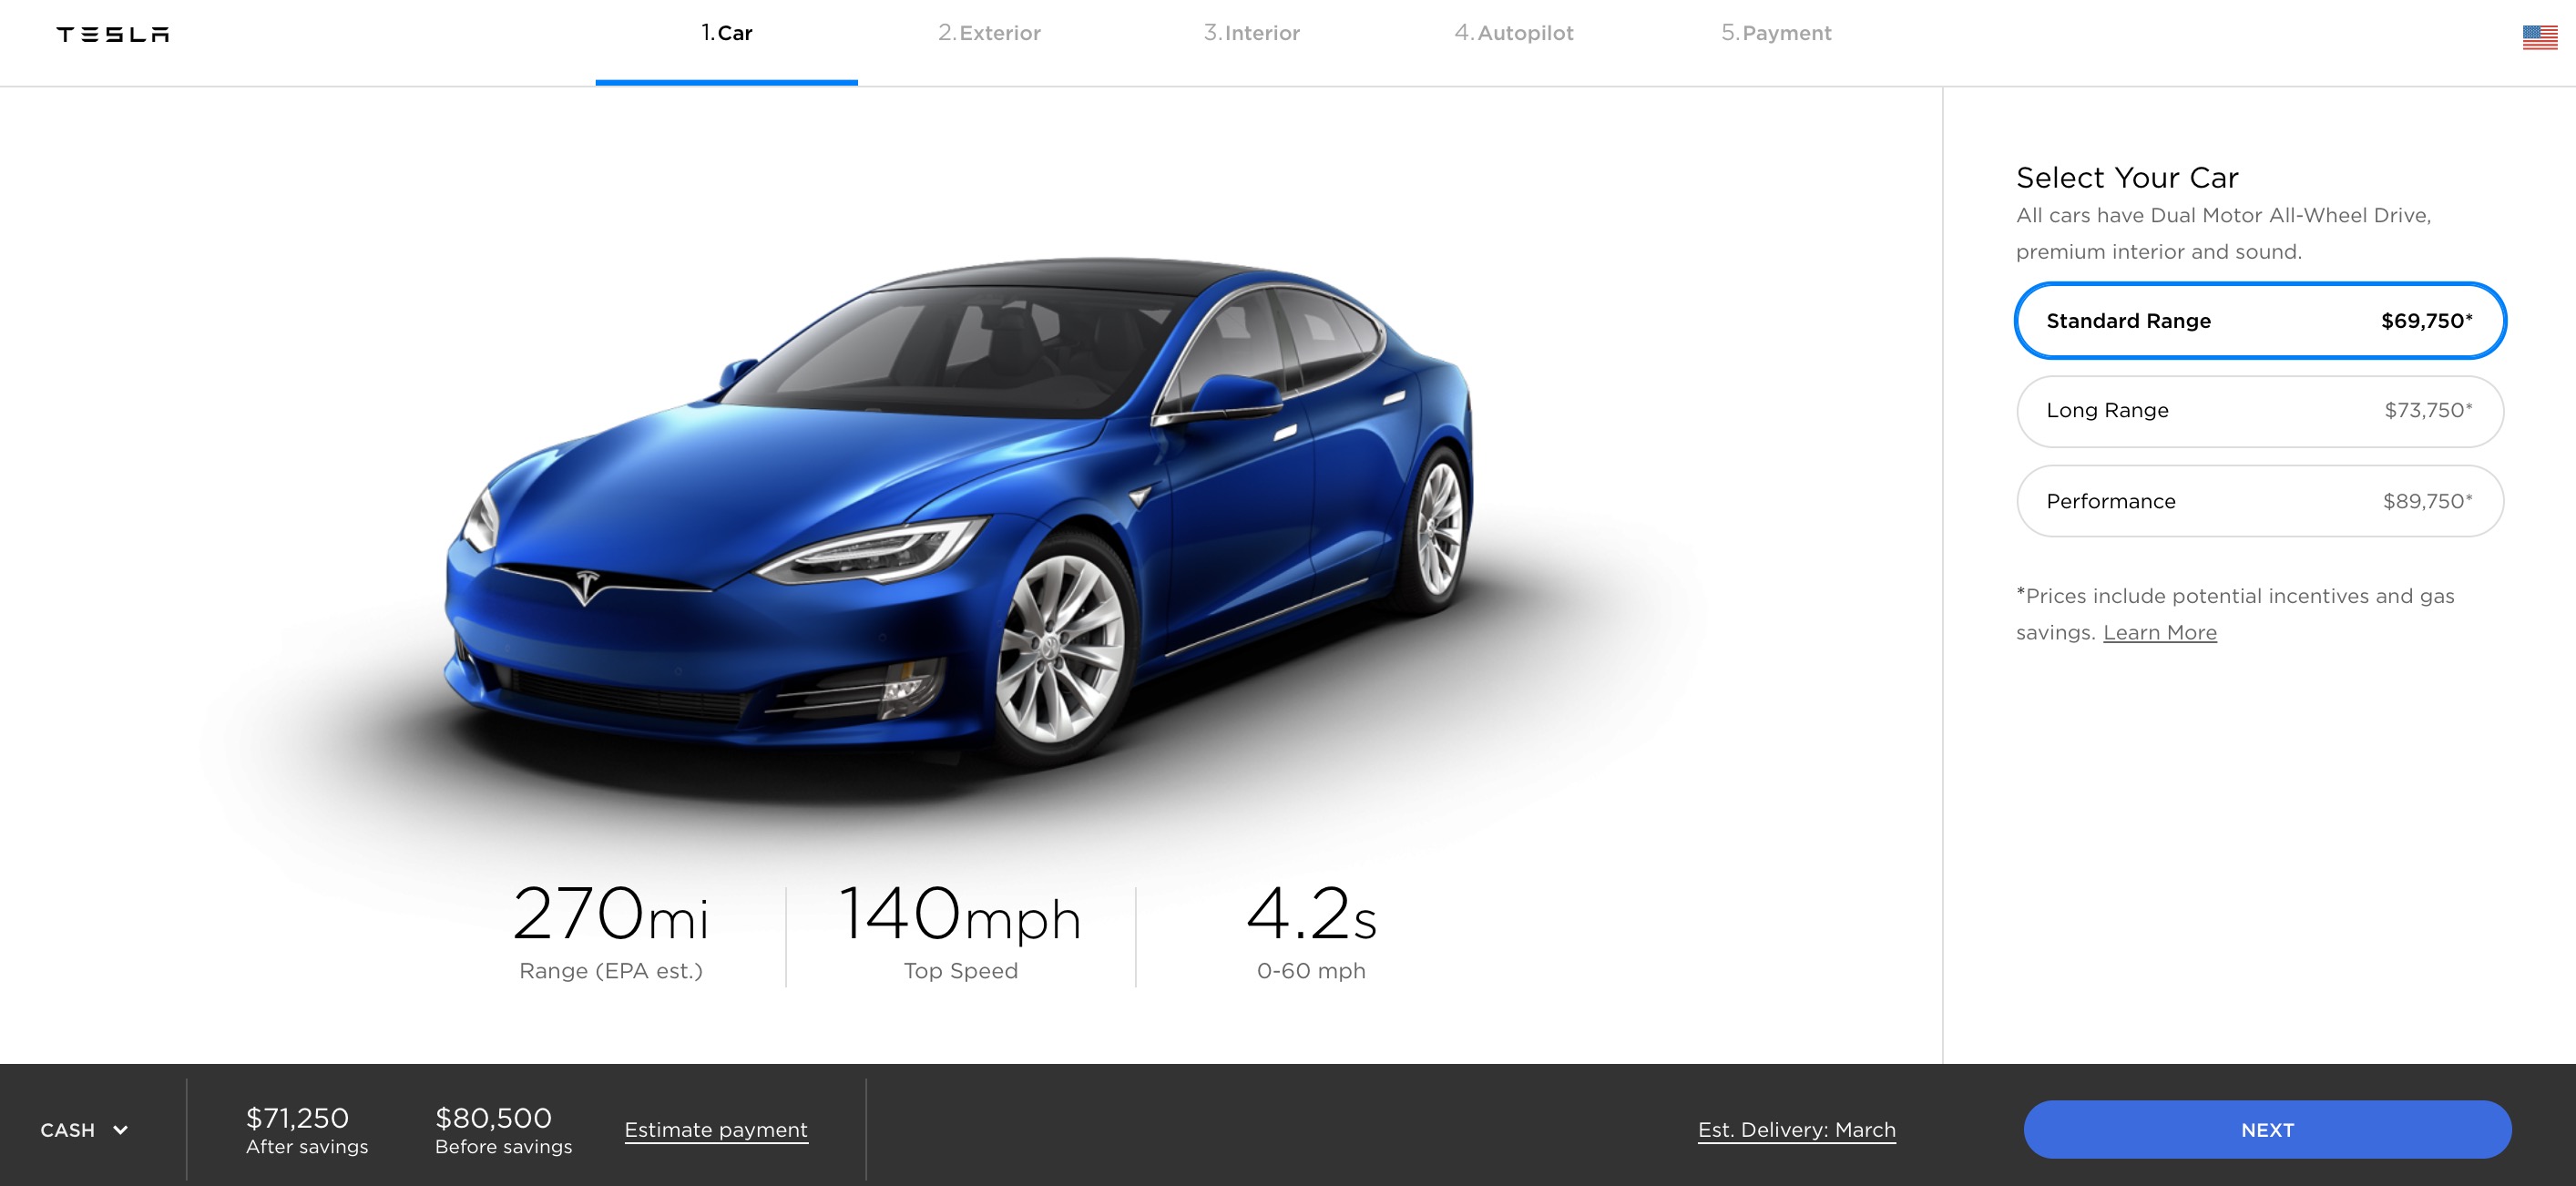 Tesla Releases New Model S Battery Pack Makes Massive Price Drop Kills Base Model X Pack Electrek